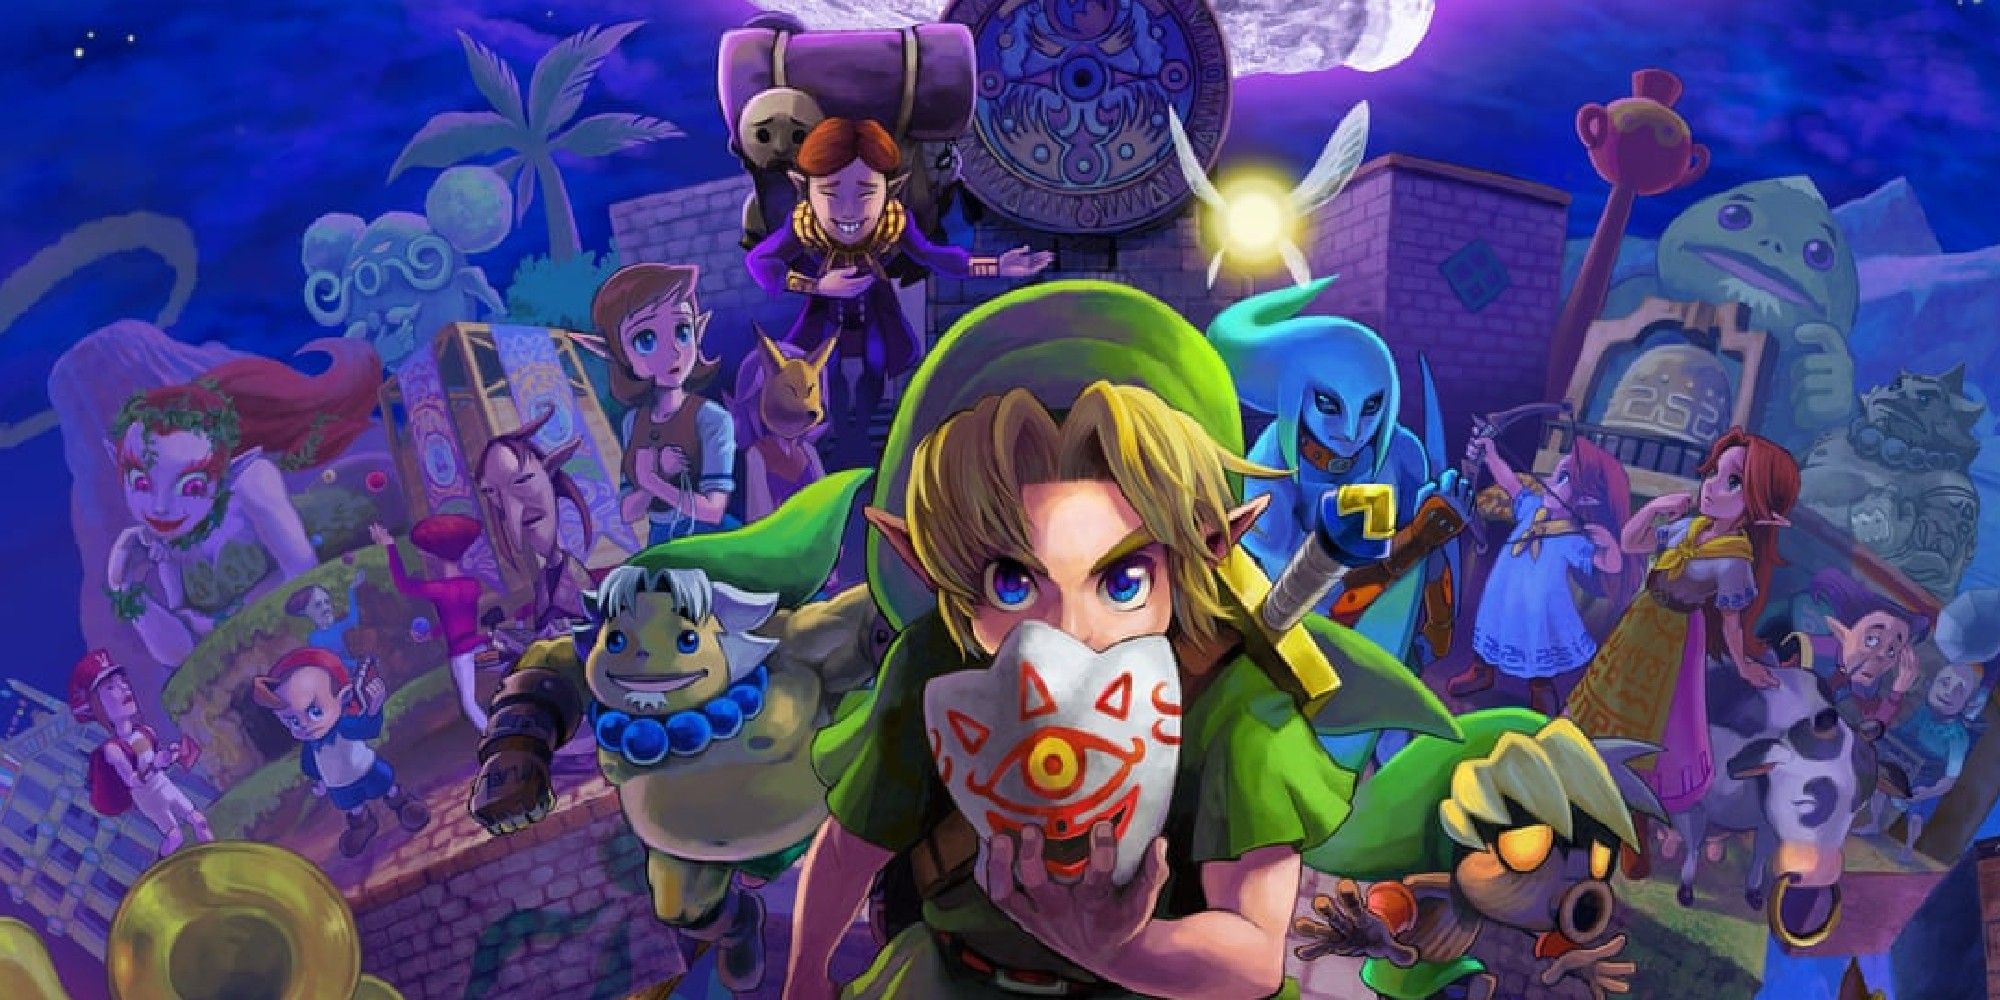 Replay – The Legend Of Zelda: Majora's Mask - Game Informer